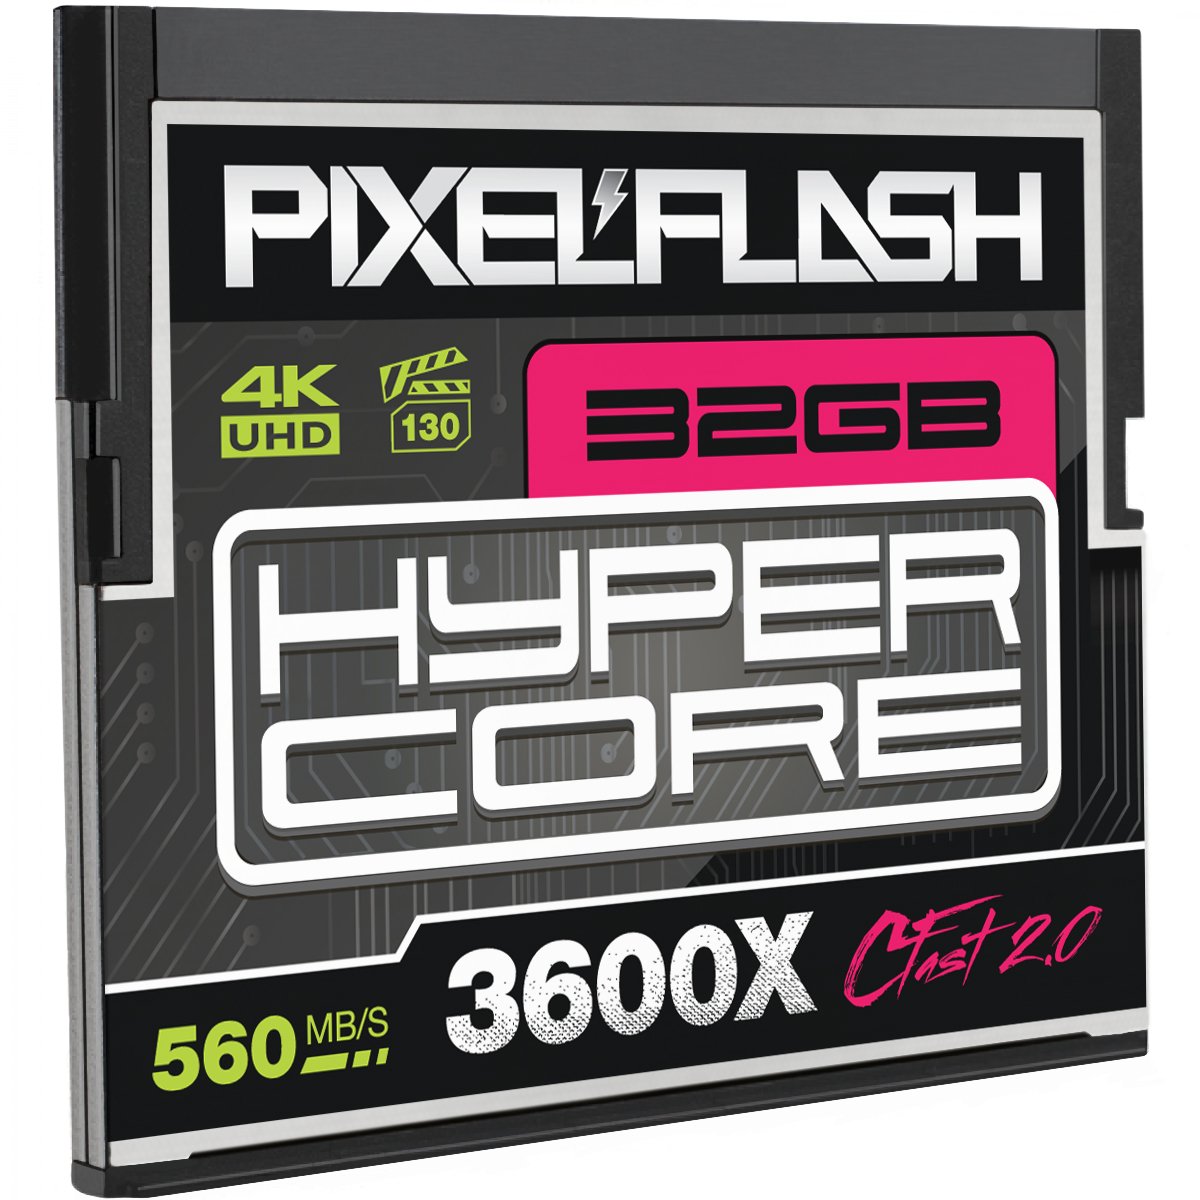 Tarjeta de memoria PixelFlash HyperCore CFast 2.0 de 32GB 3600X hasta 560MB / s SATA3 C Fast para Phase One, Leica, Canon, Hasselblad, Blackmagic Ursa y más